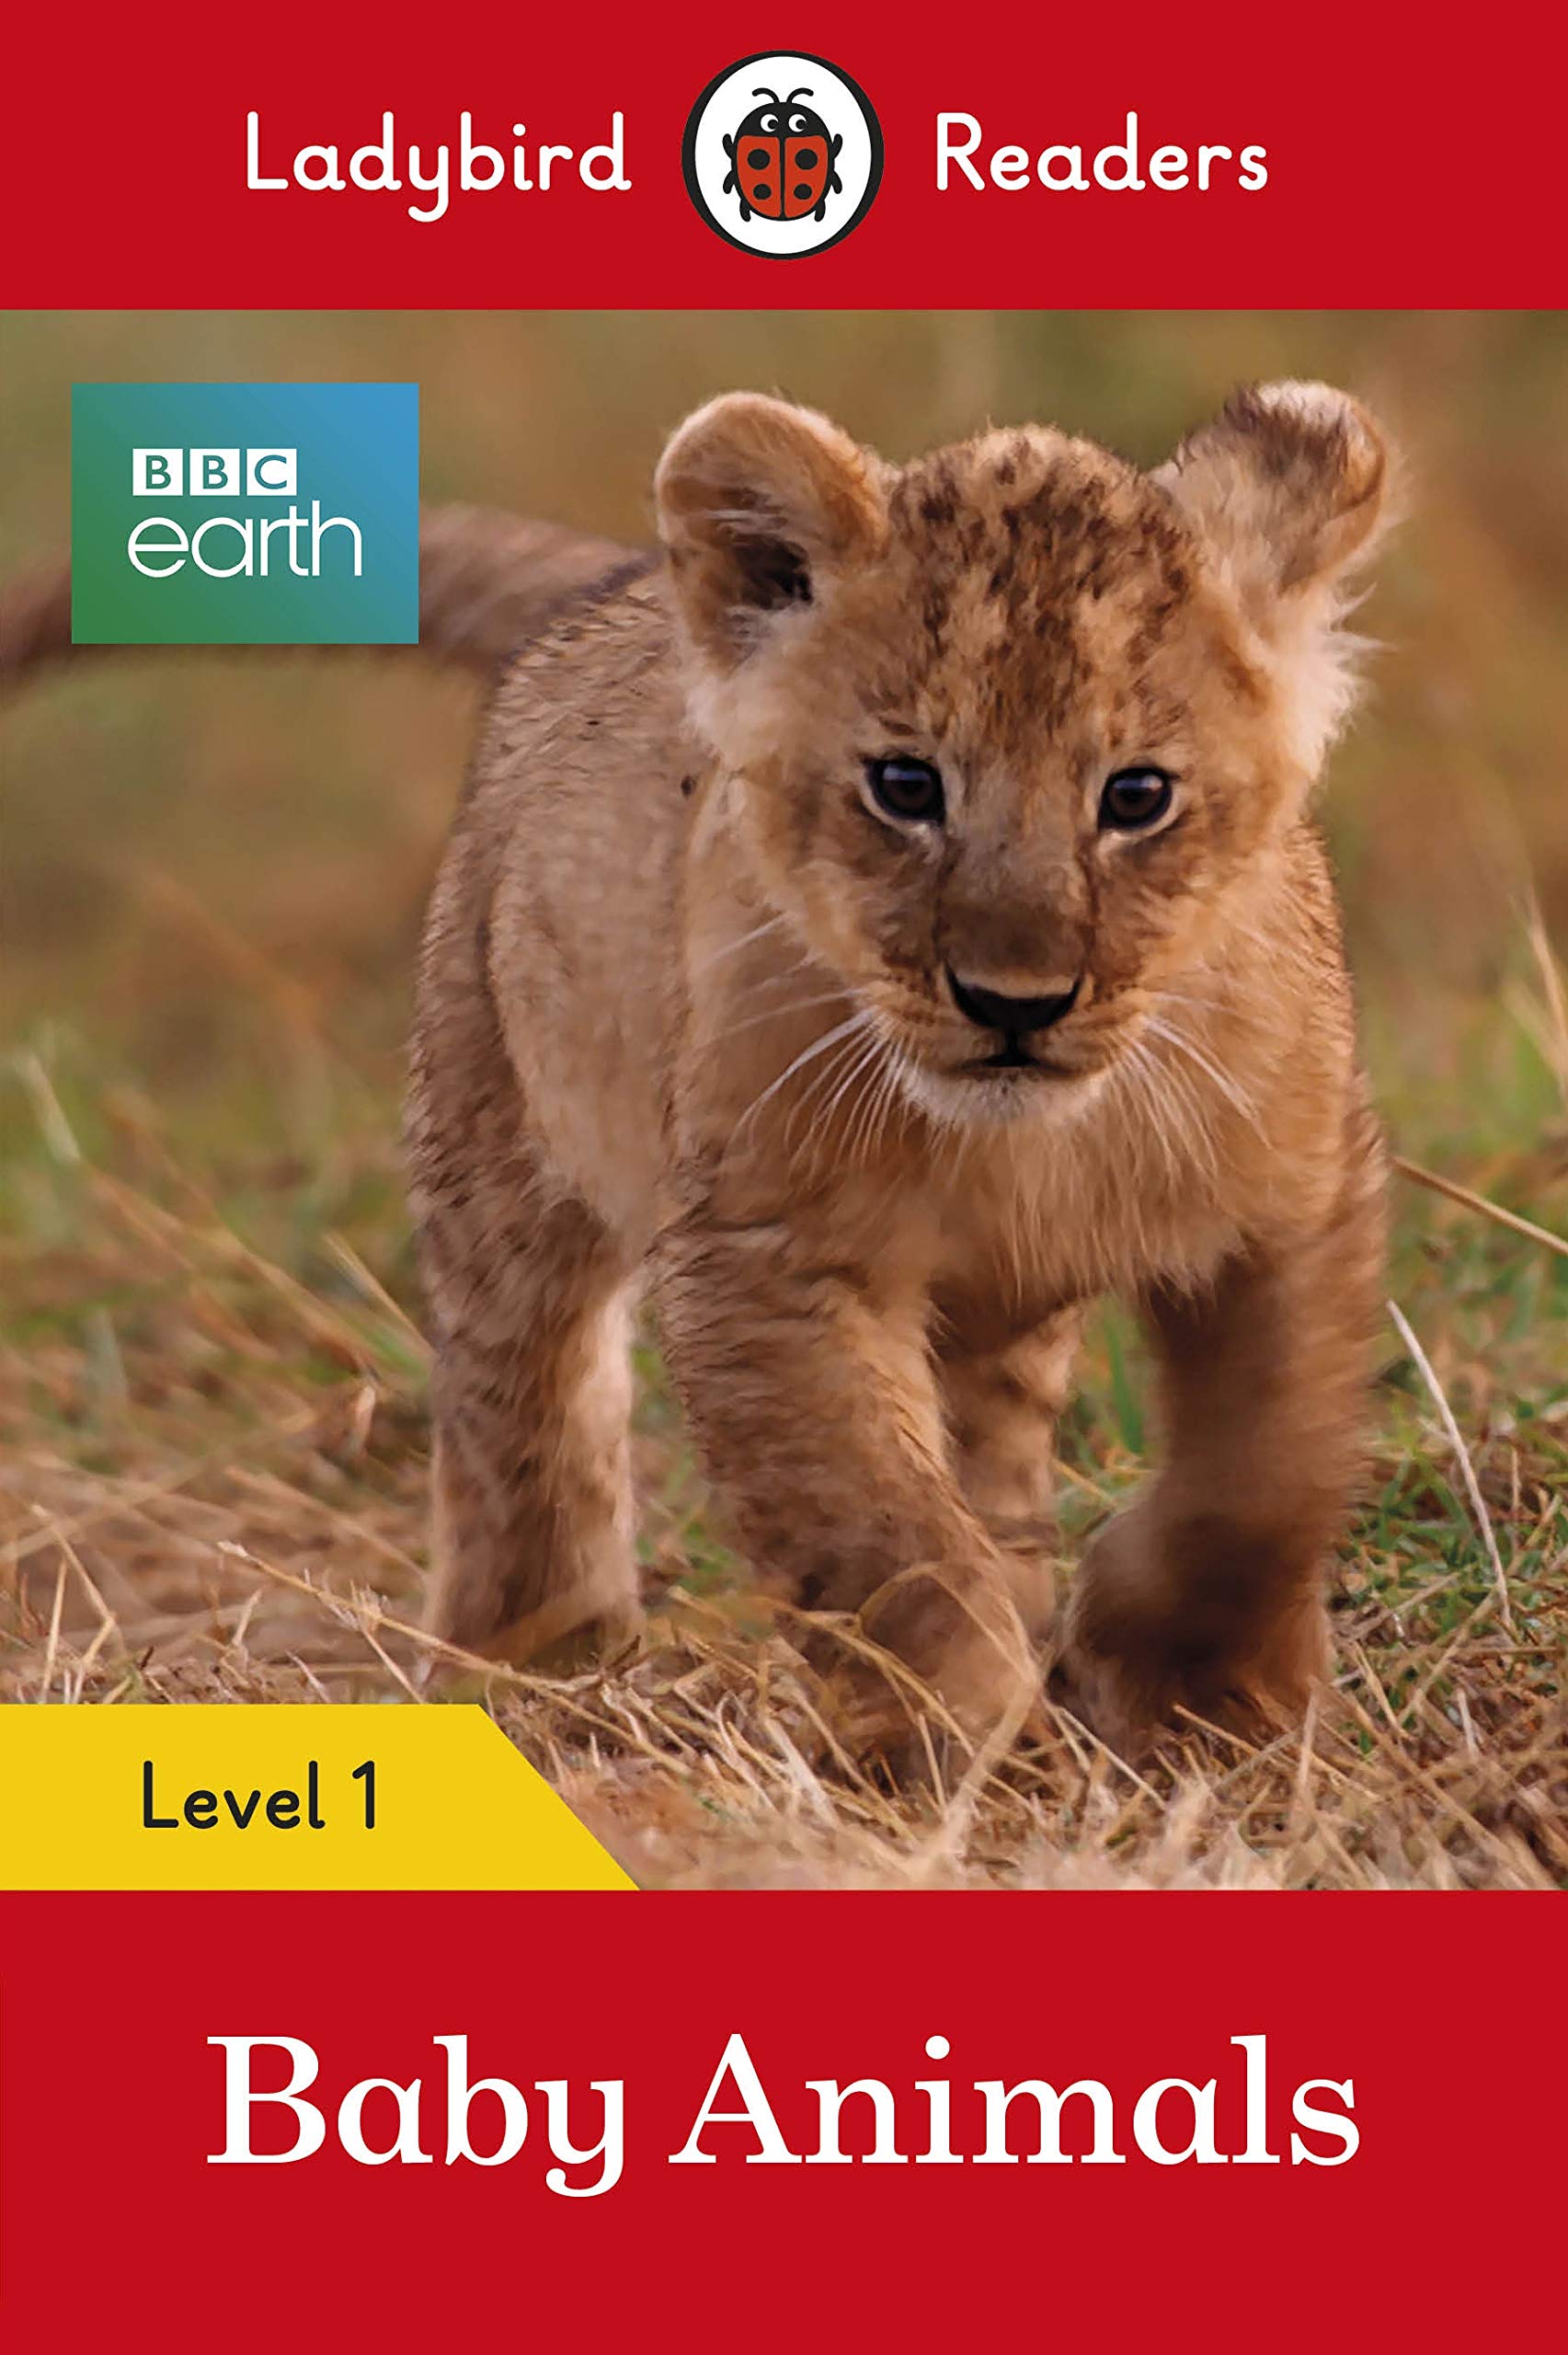 Ladybird Readers Level 1 : BBC Earth - Baby Animals